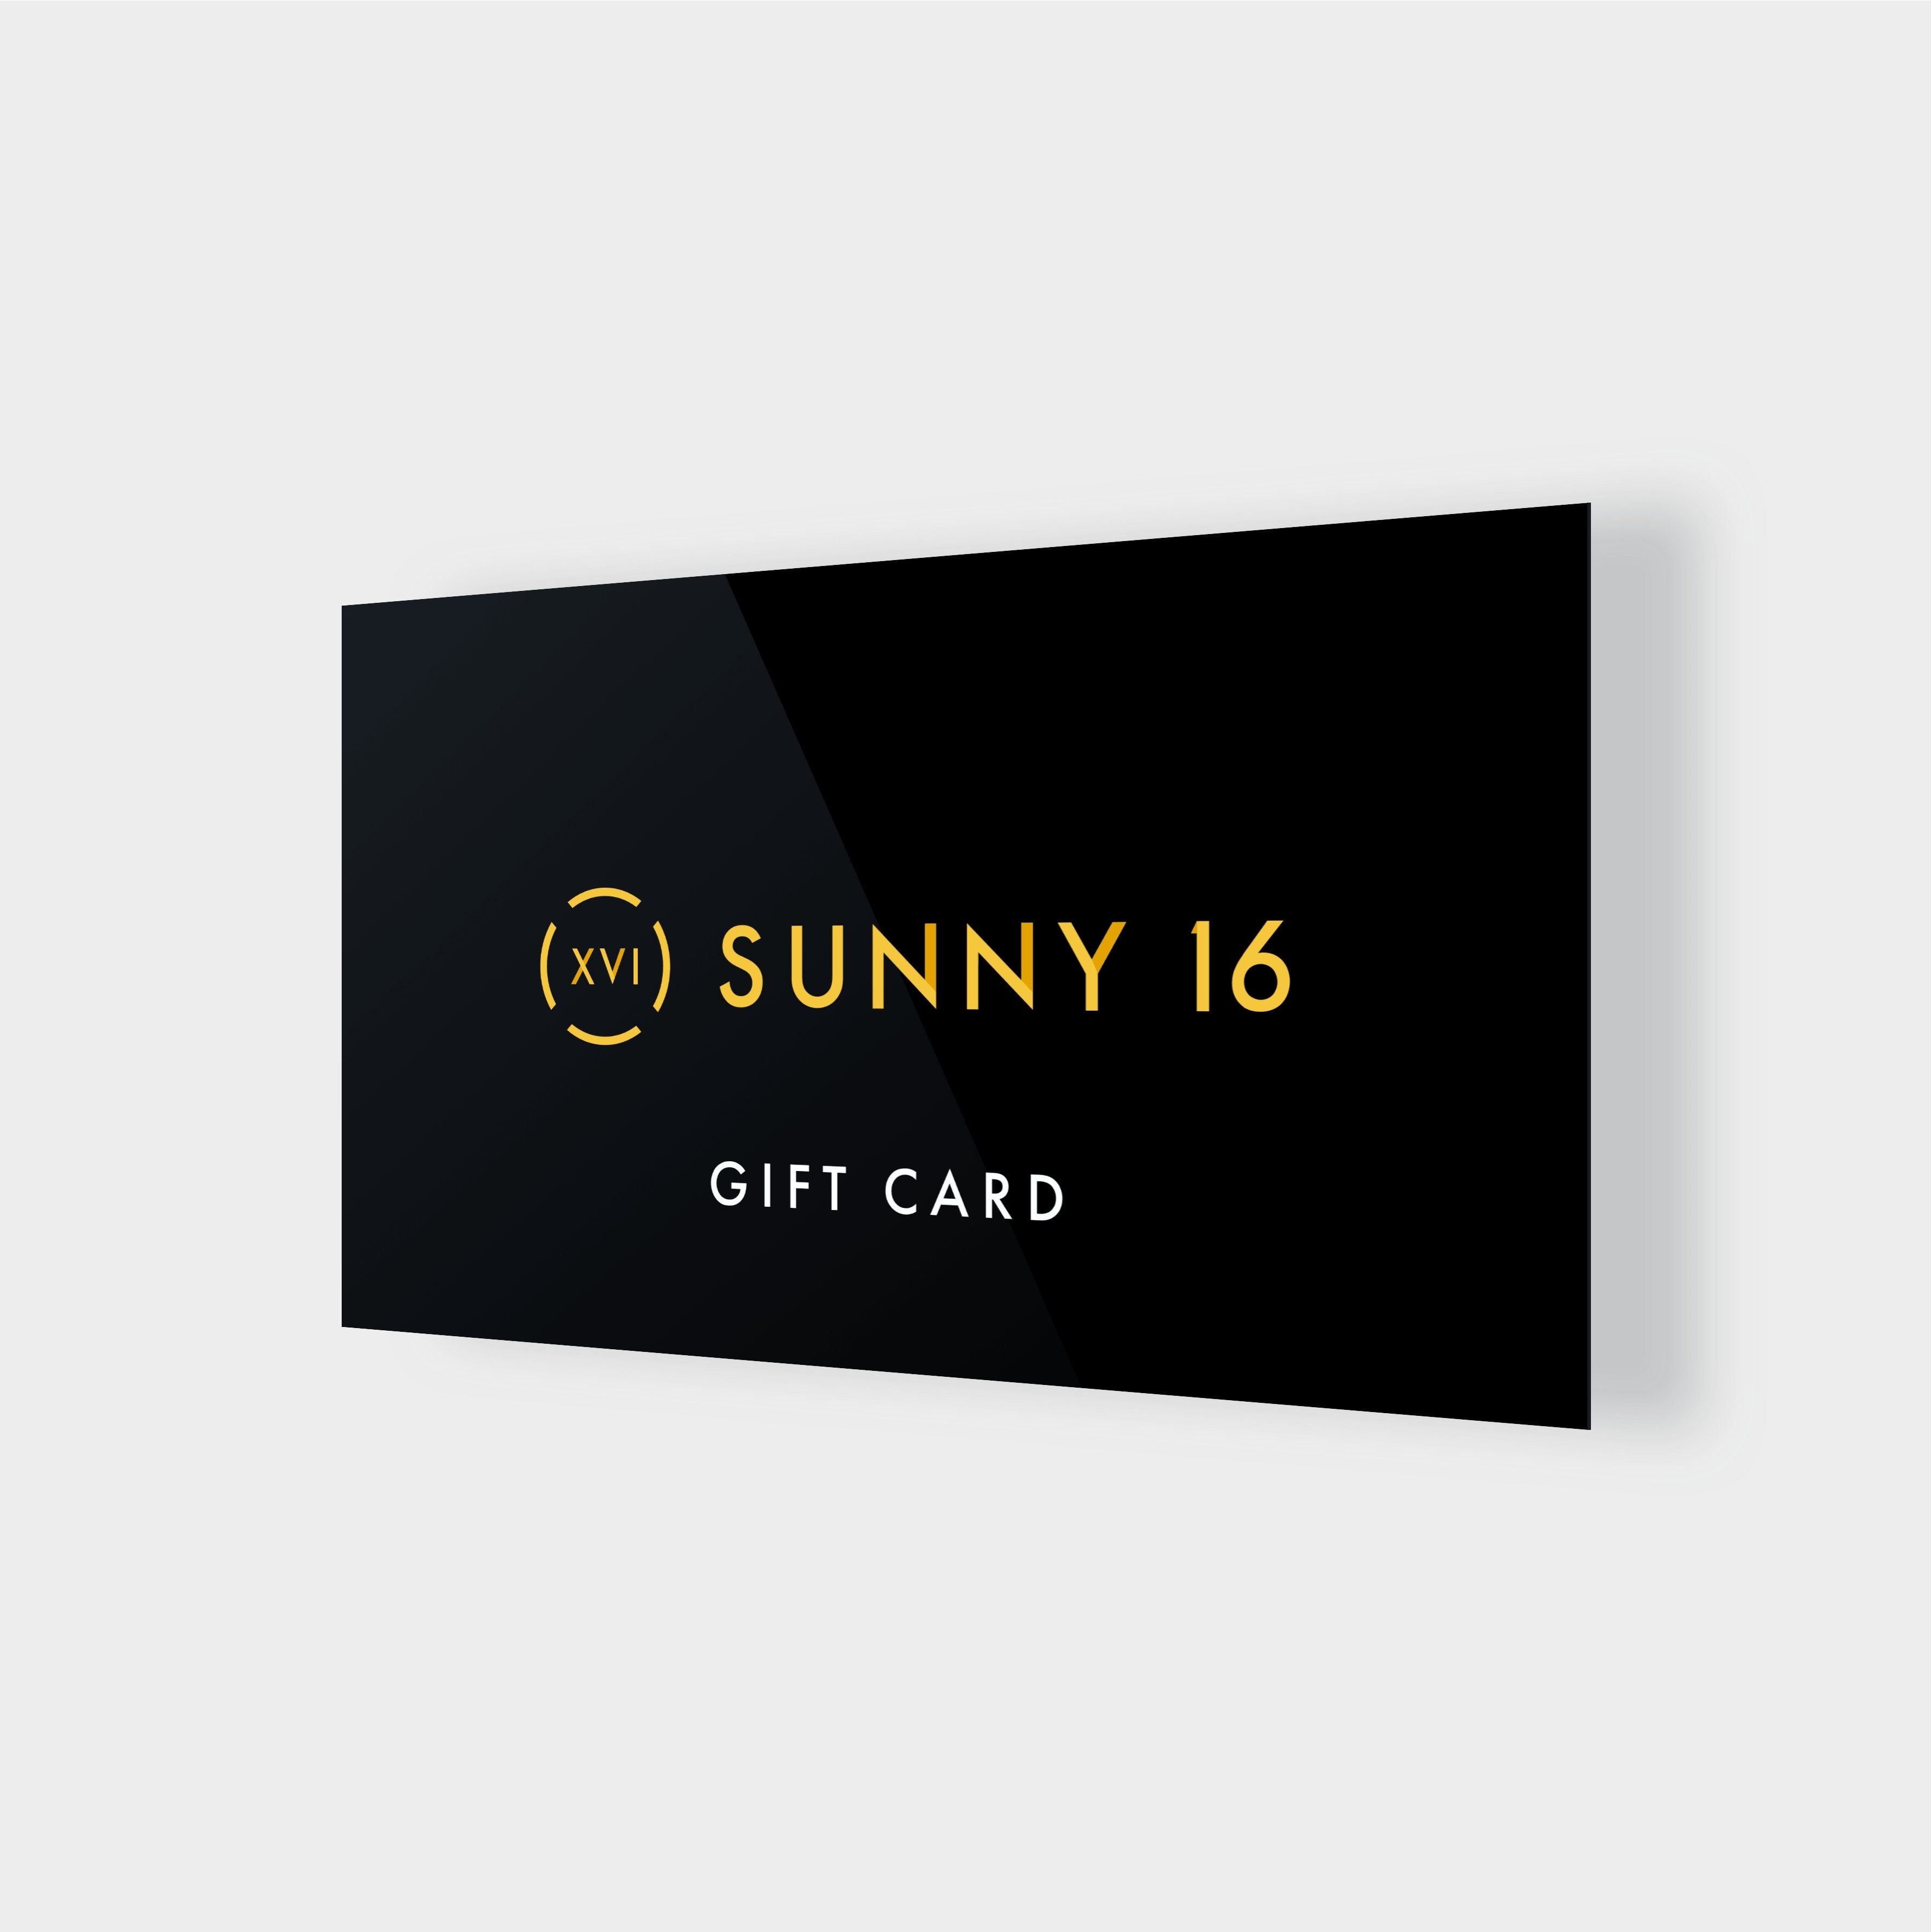 Sunny 16 Gift Card